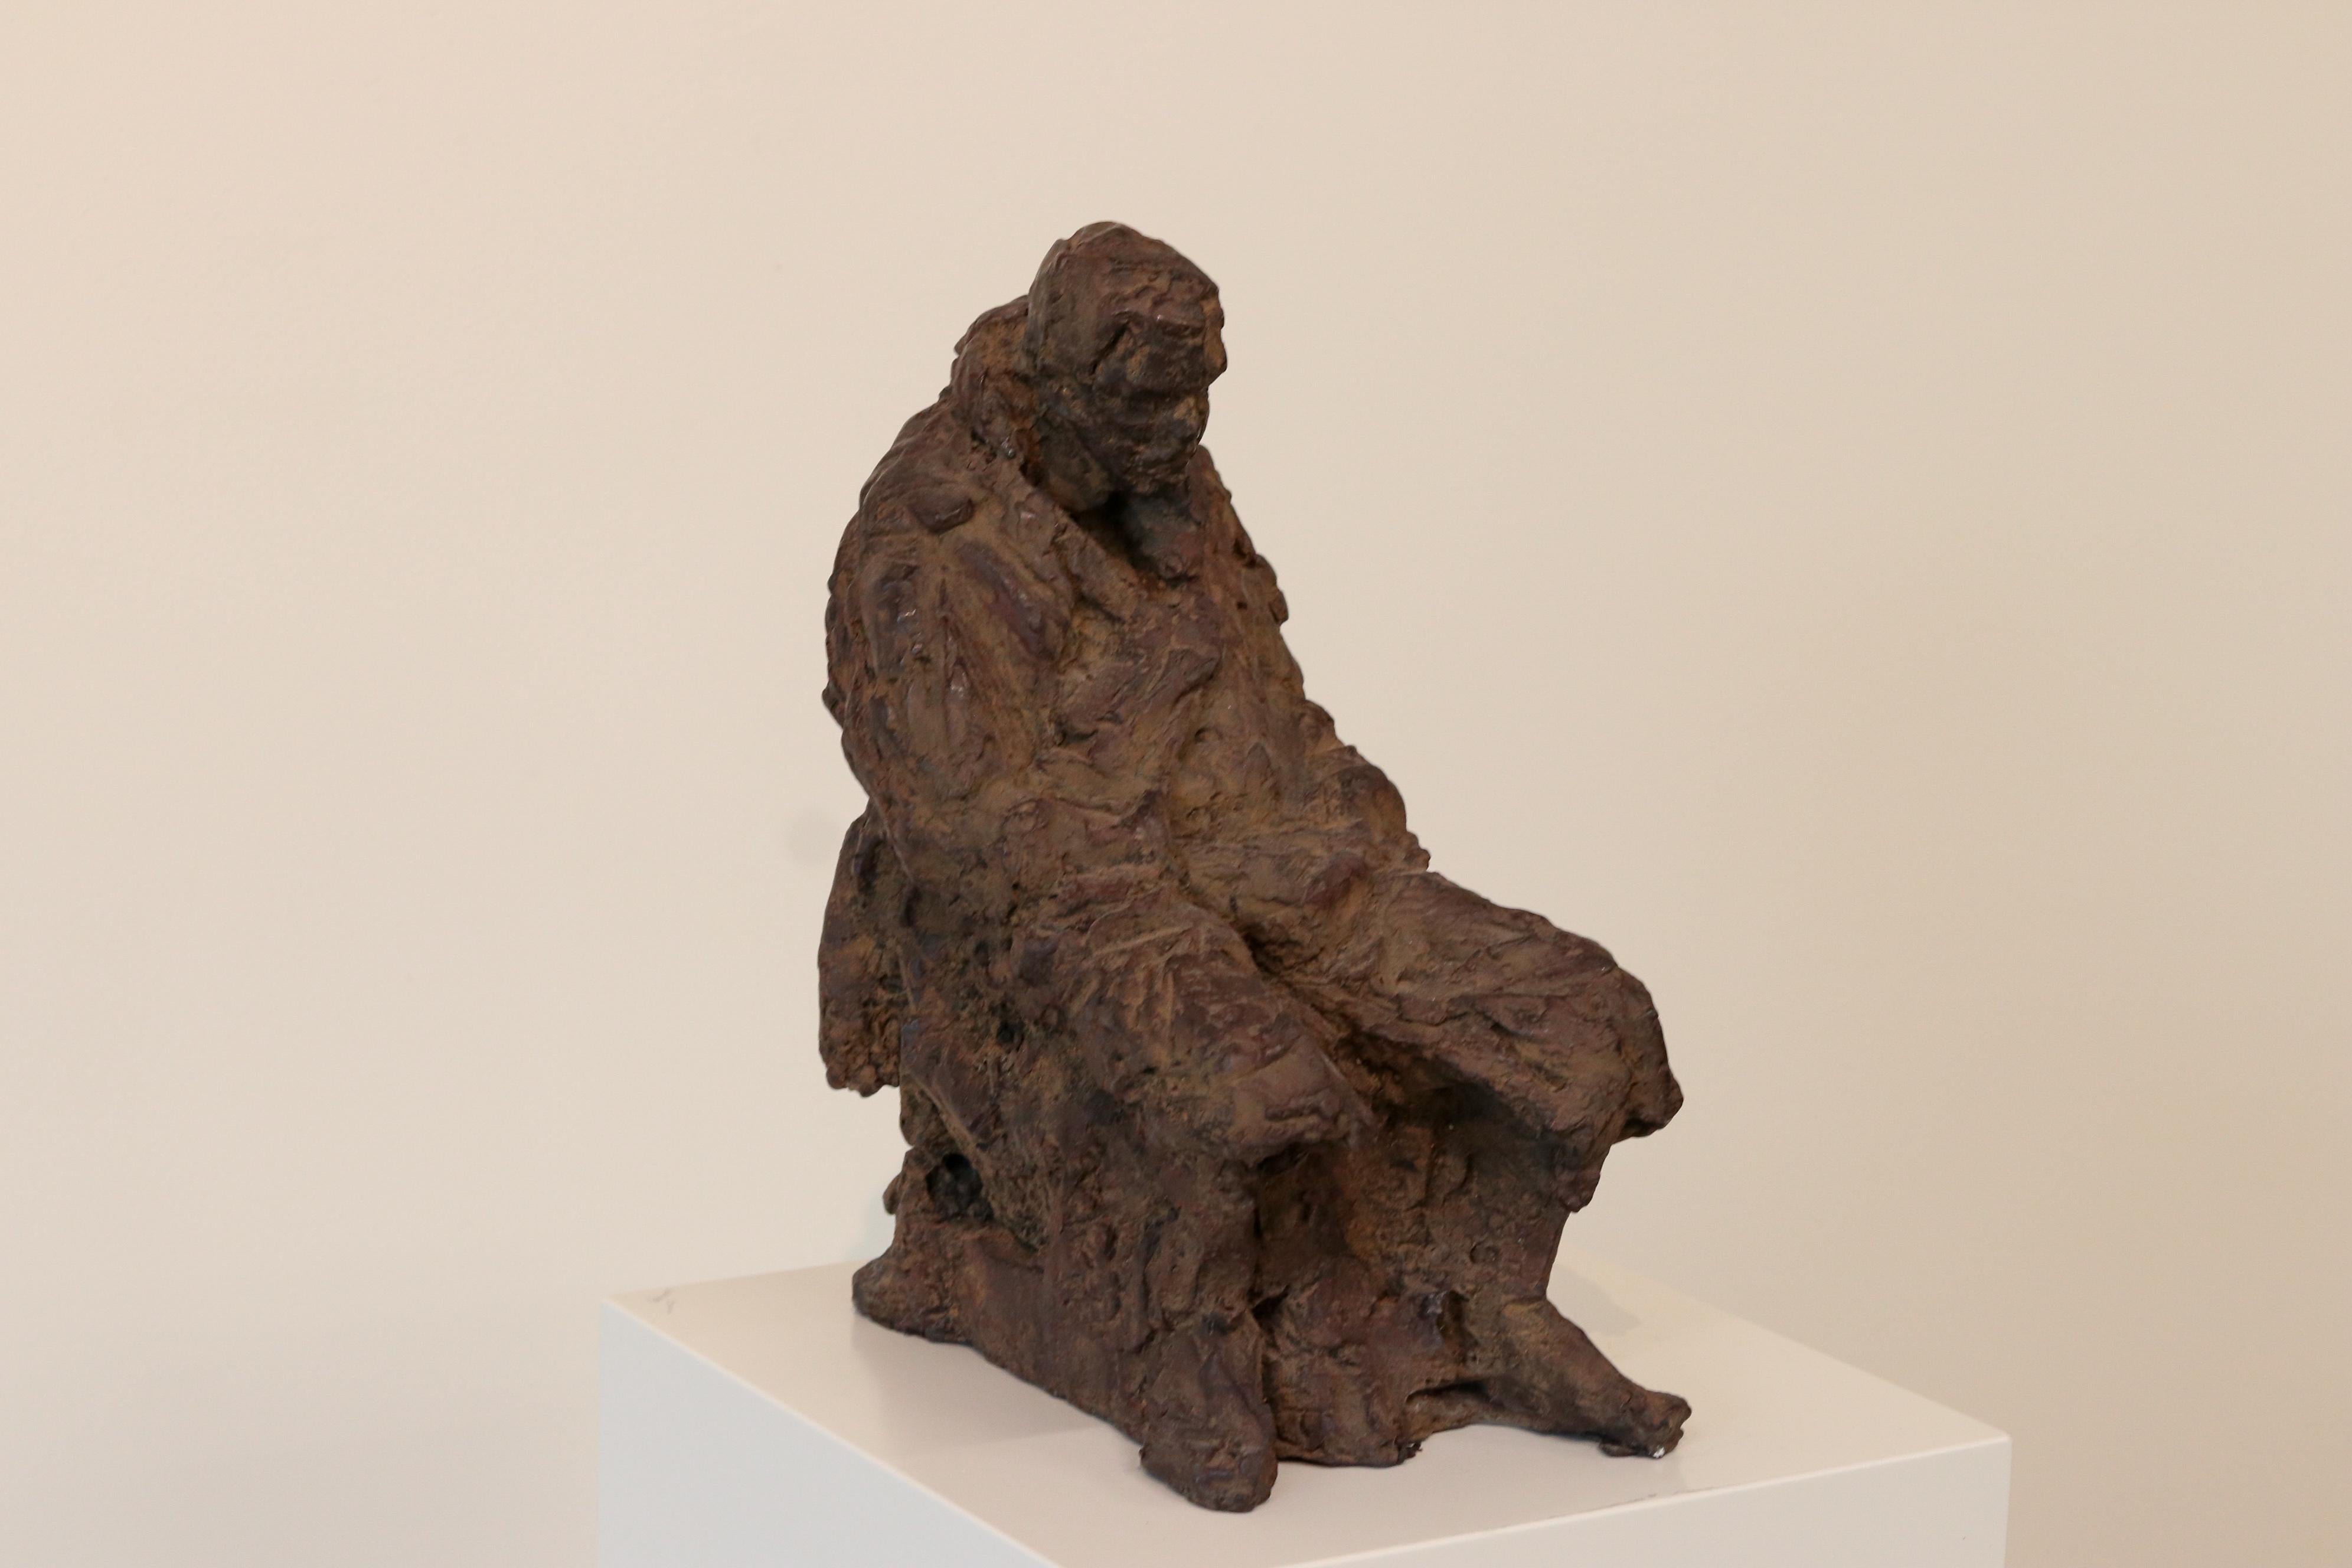 Peter Adams Figurative Sculpture - Retirement - 21st Century Contemporary Bronze Sculpture of a sitting old Man 